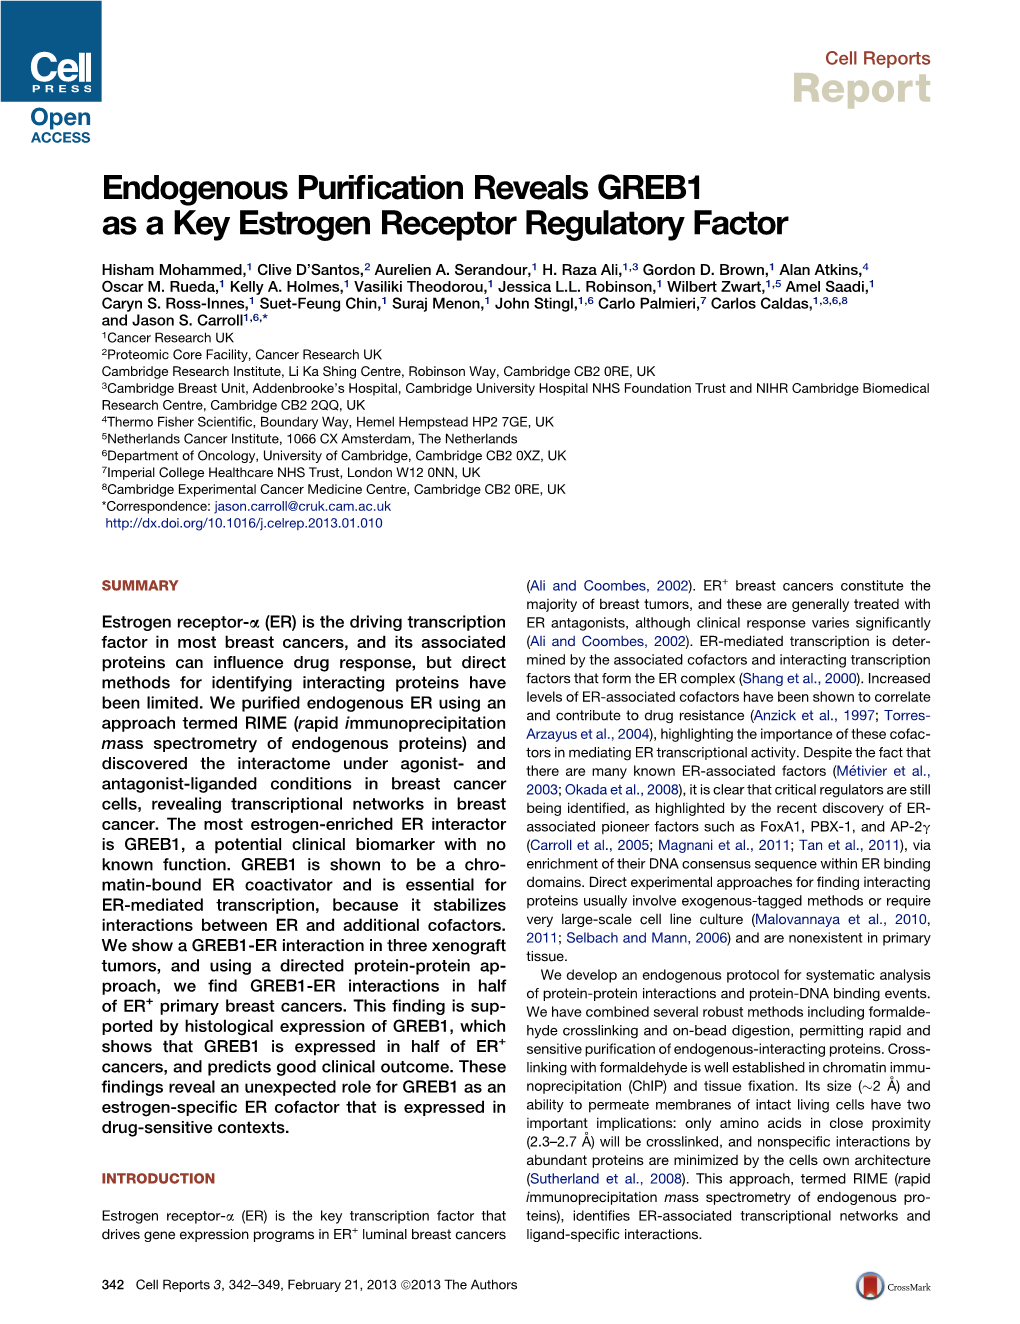 Endogenous Purification Reveals GREB1 As a Key